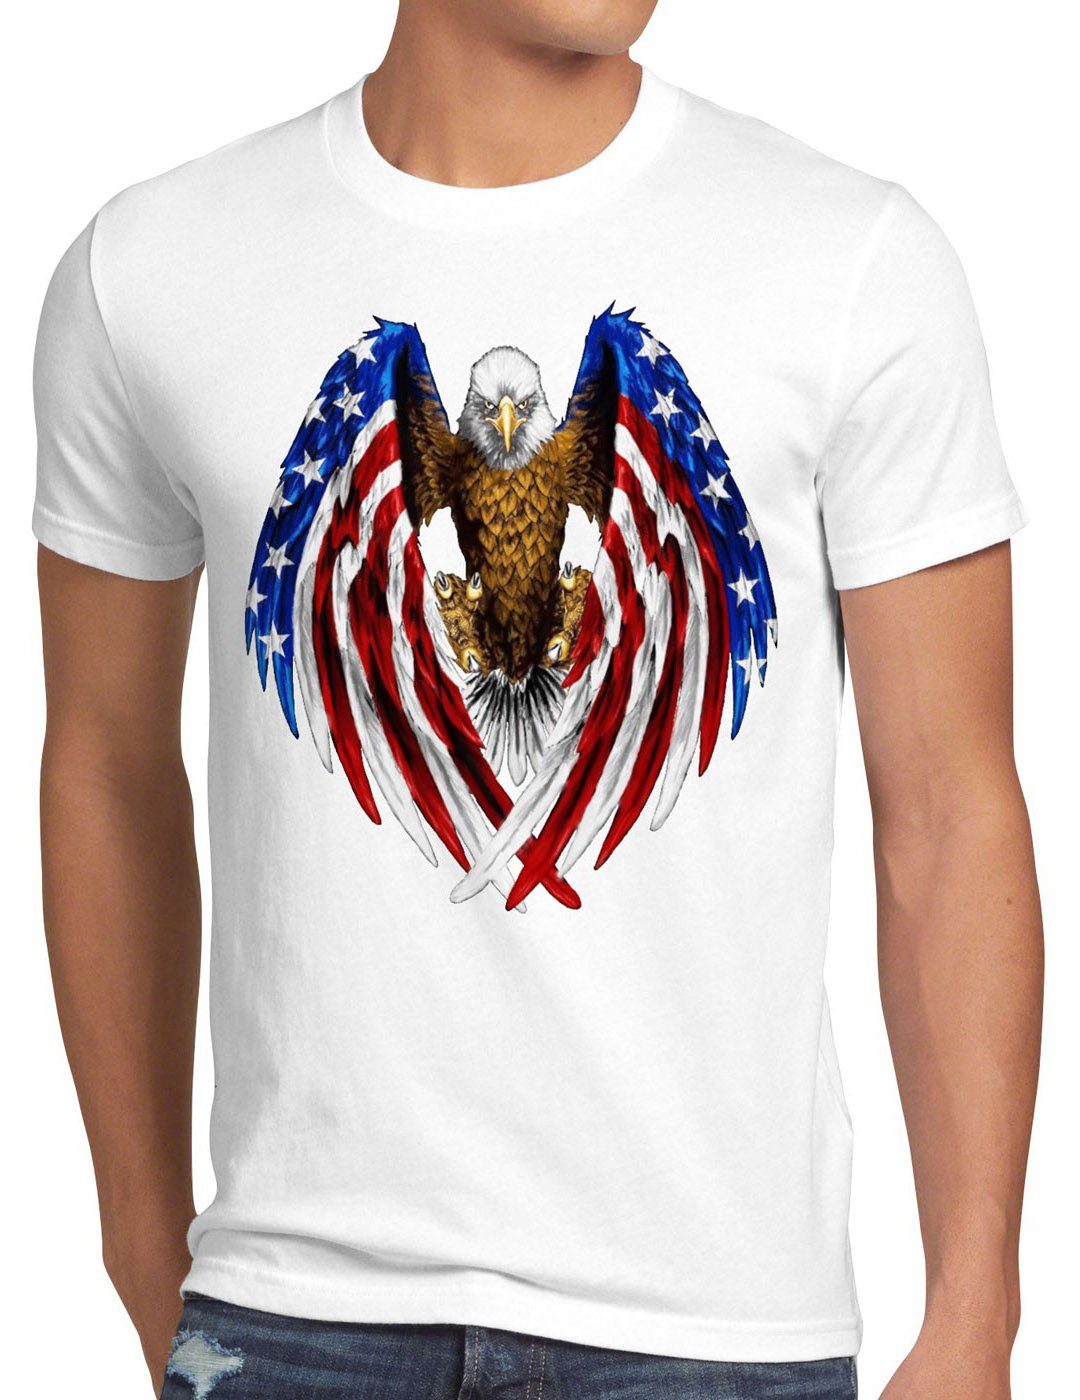 style3 Print-Shirt Herren T-Shirt US flagge unites states of america stars and stripes usa adler 4. juli weiß